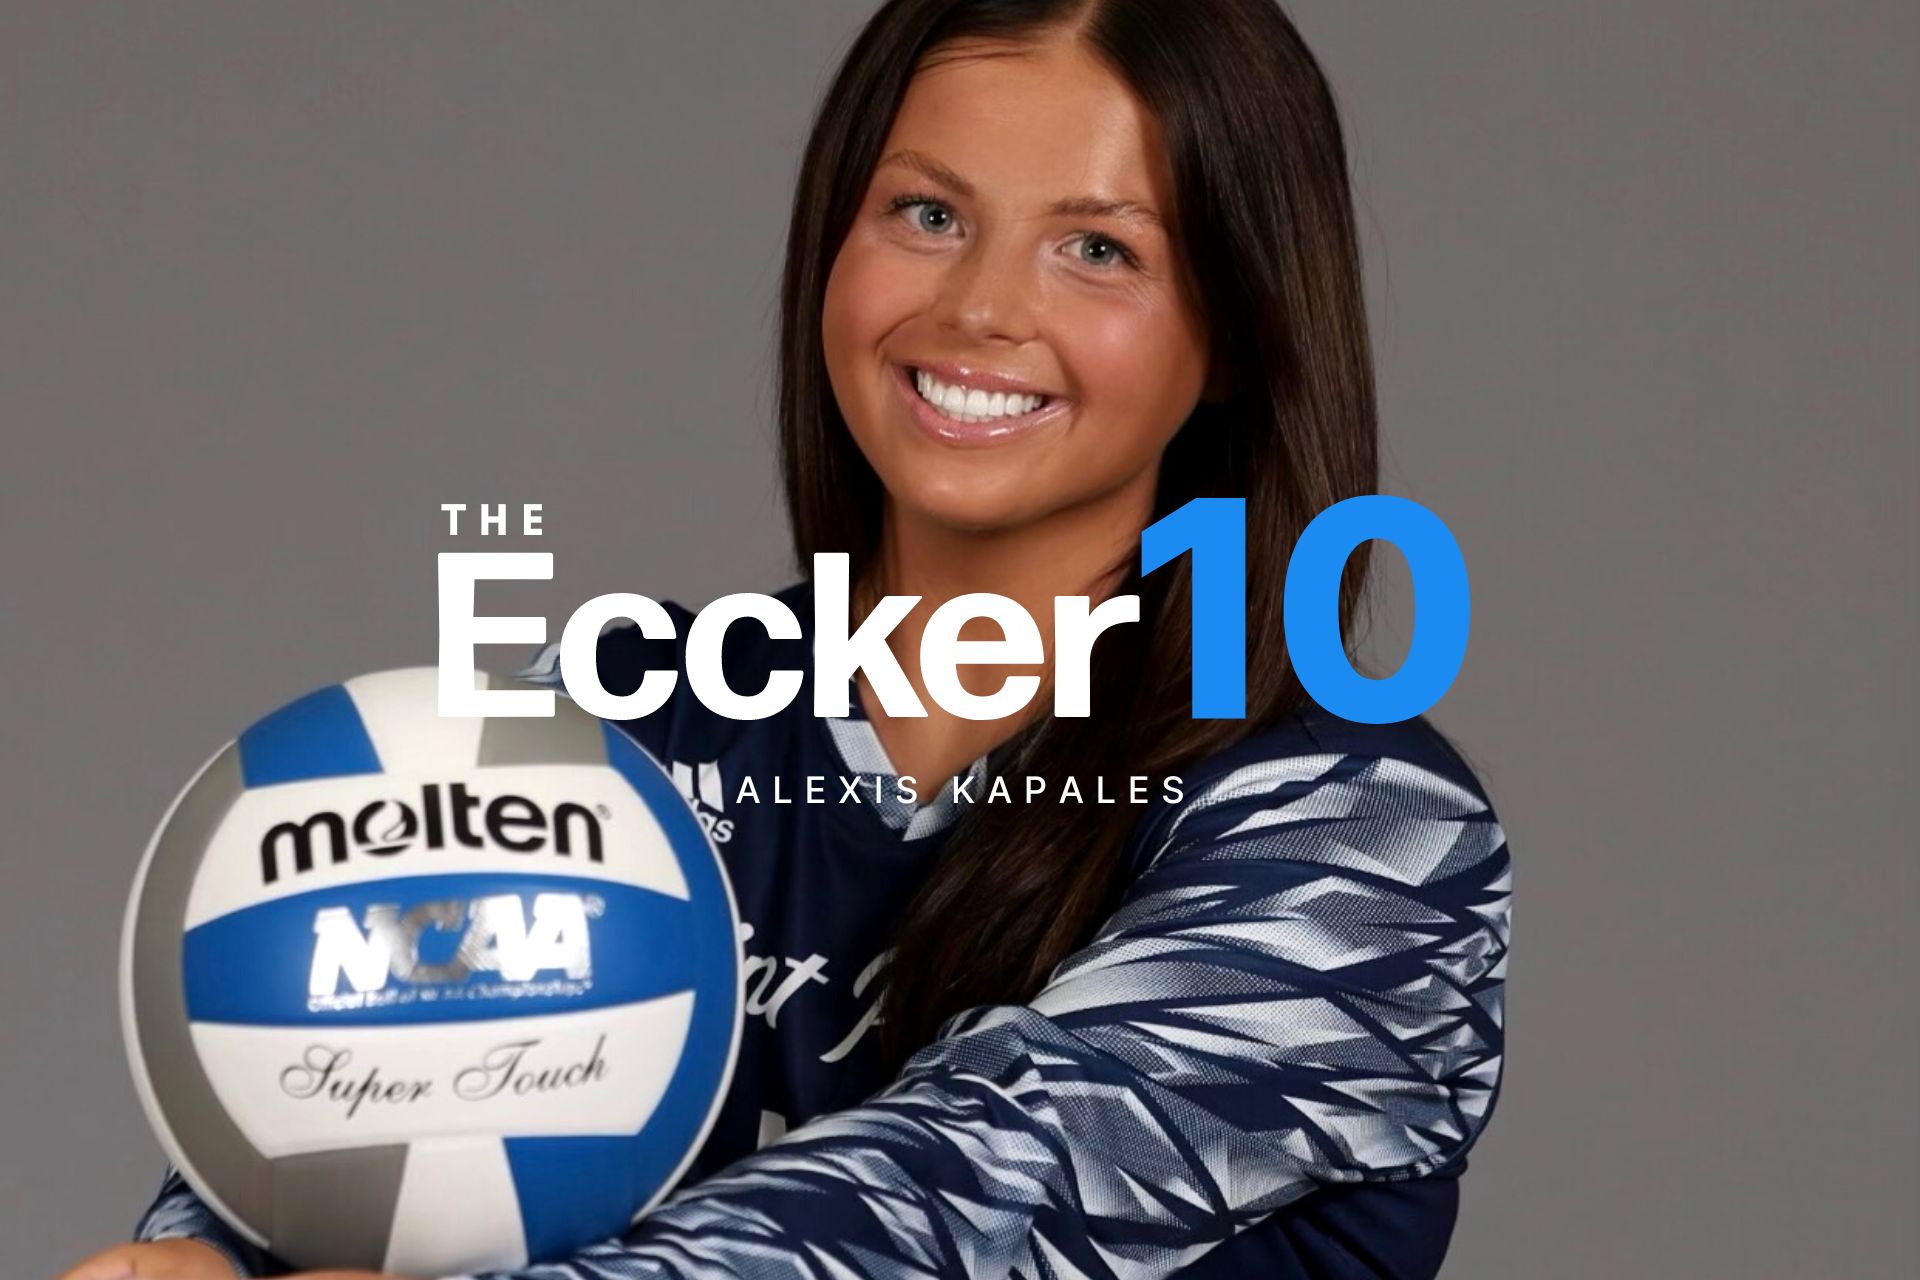 The Eccker 10 - Alexis Kapales